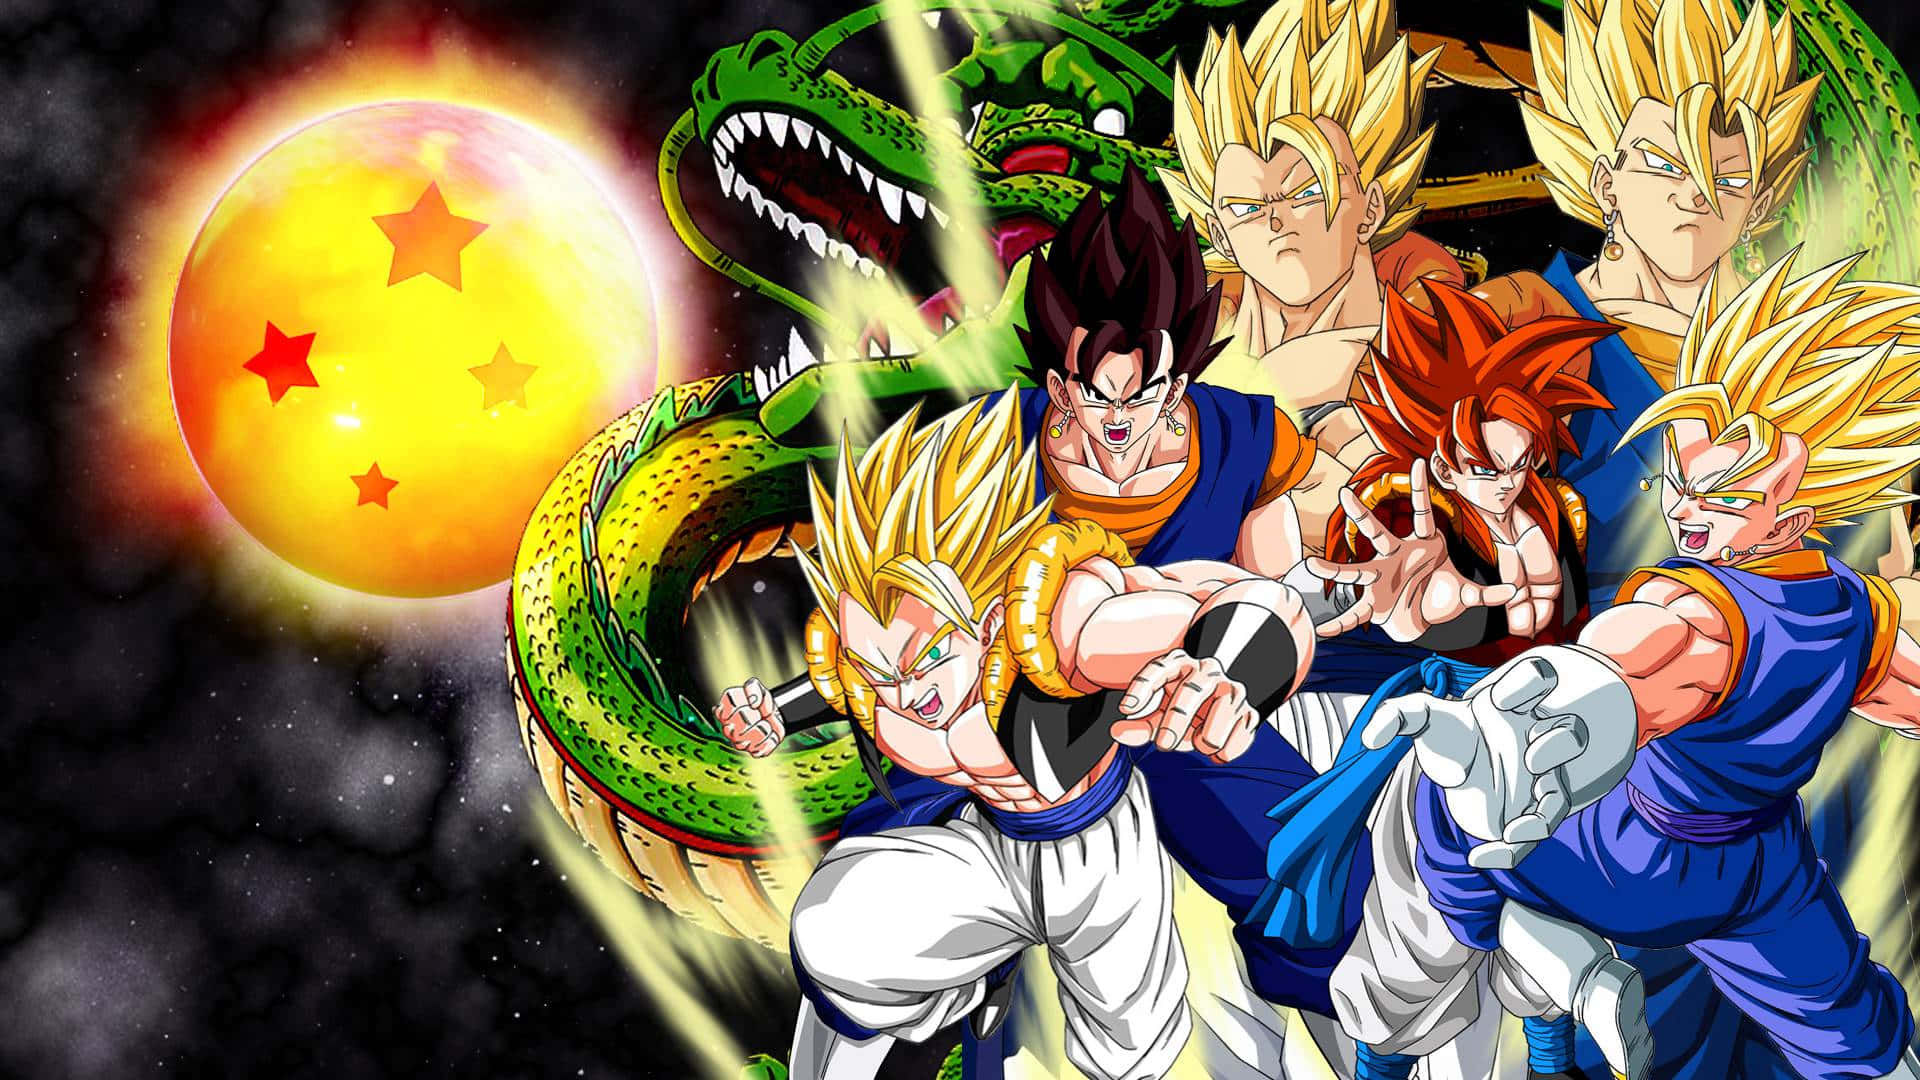 Goku and Friends - Epic Dragon Ball Z Wallpaper